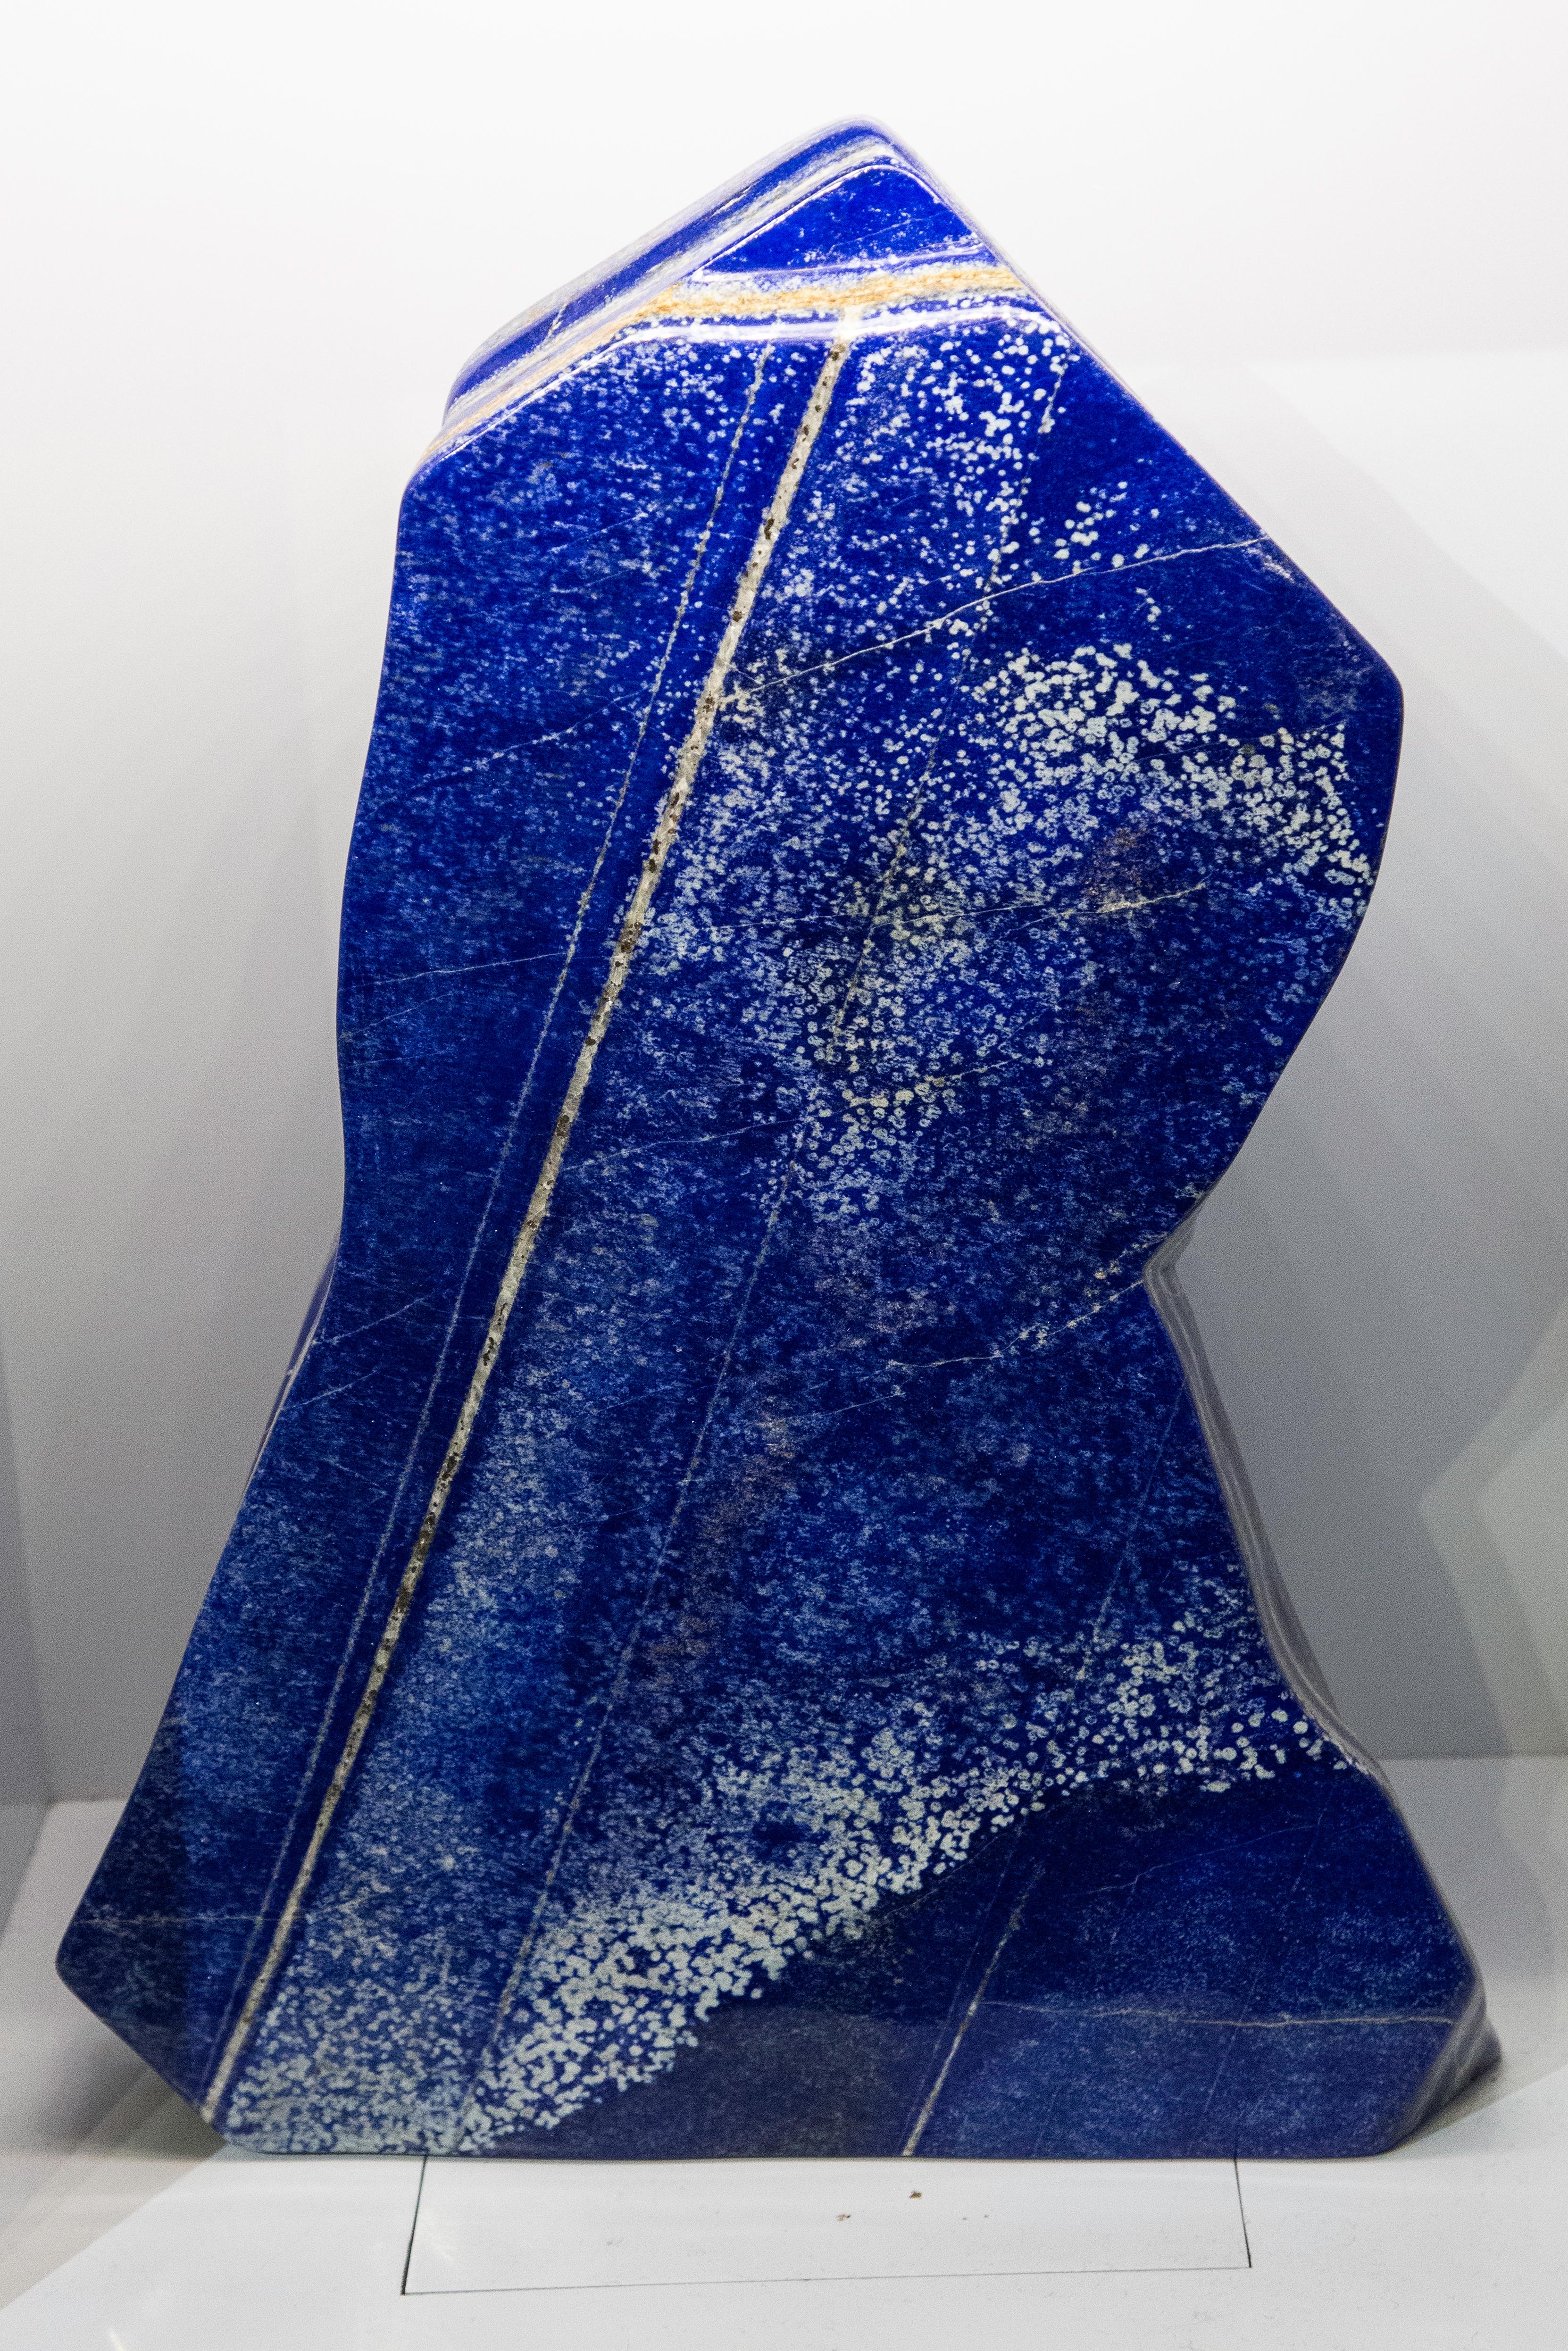 large lapis lazuli for sale